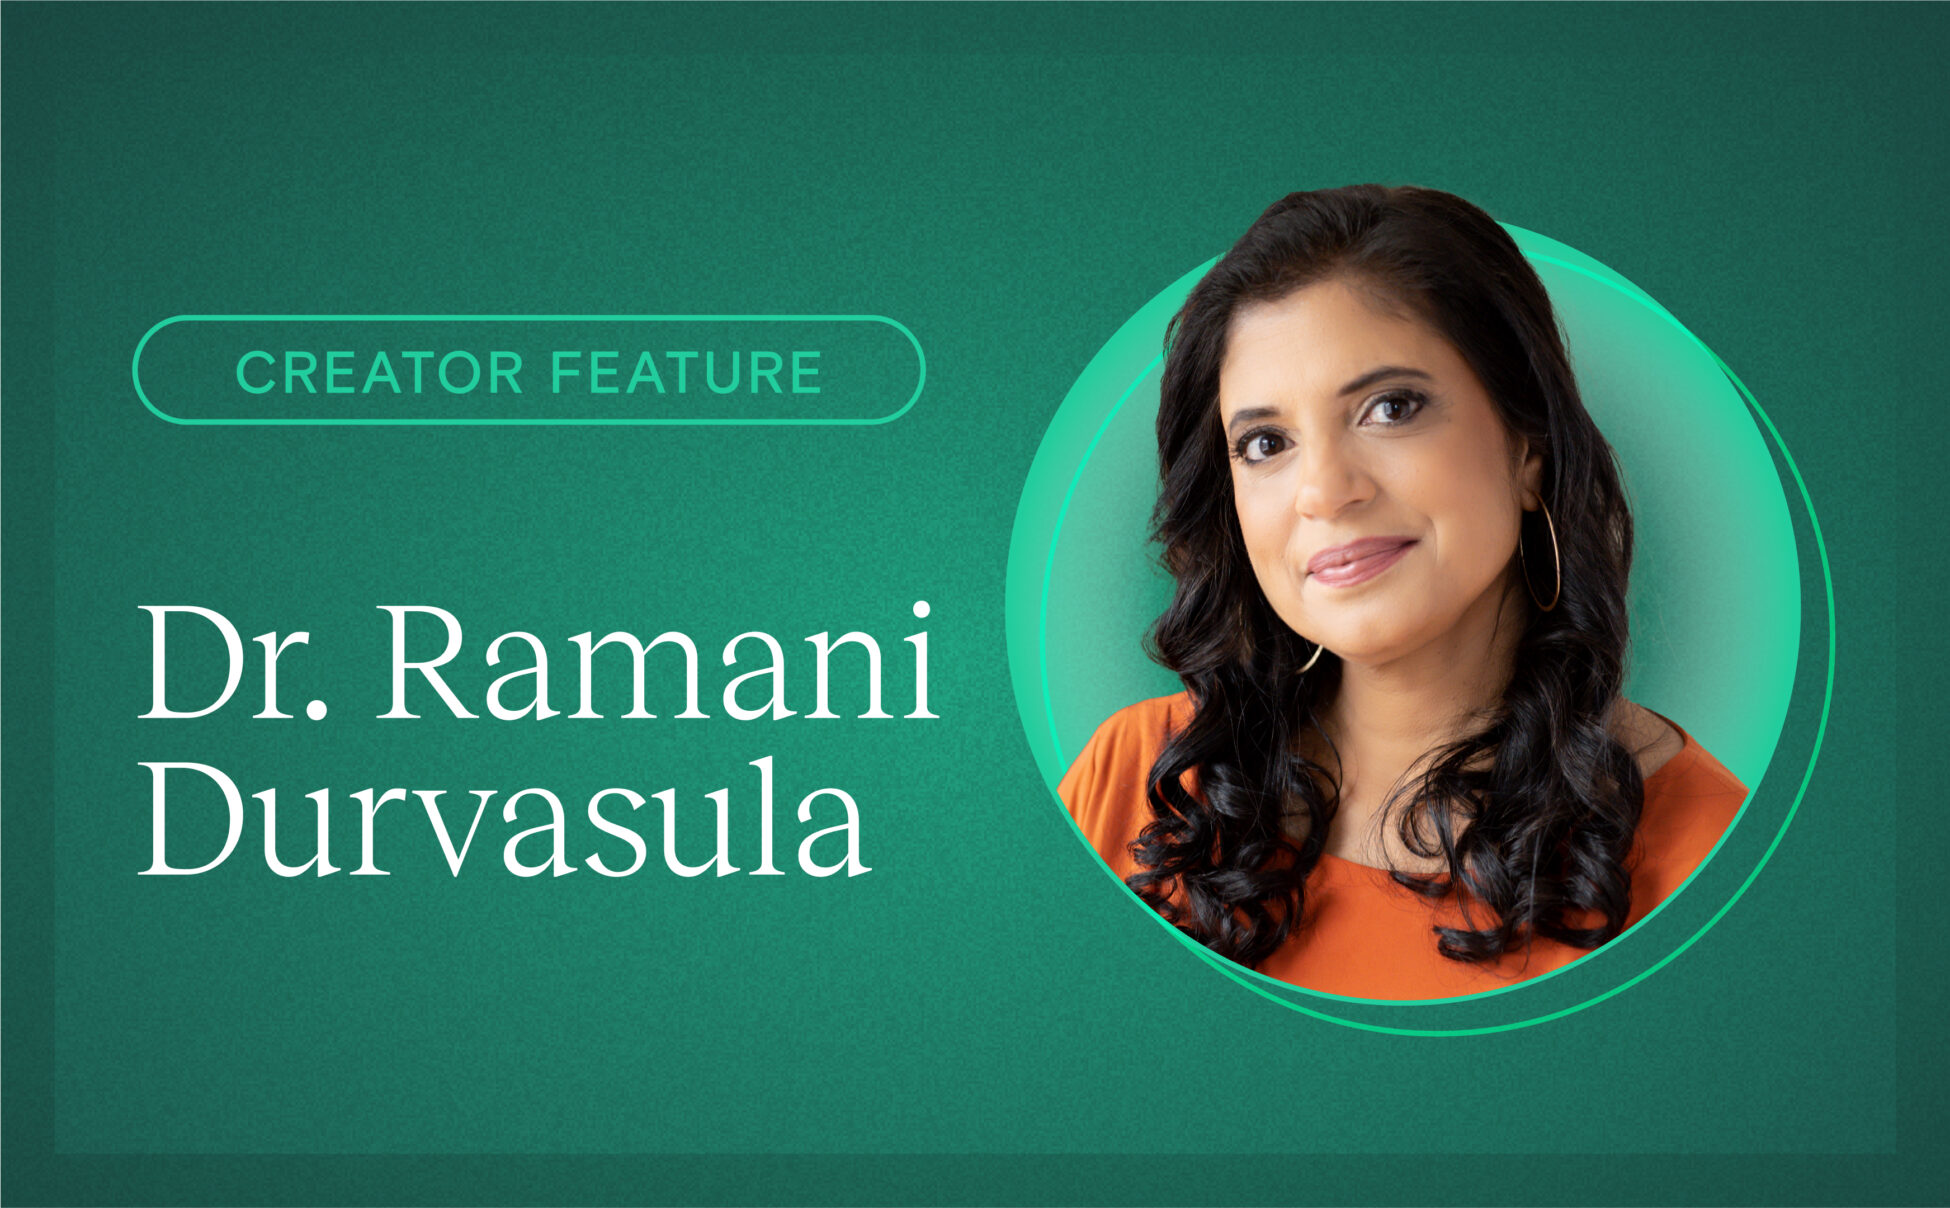 Dr. Ramani Durvasula shares her professional insights into creator mental health